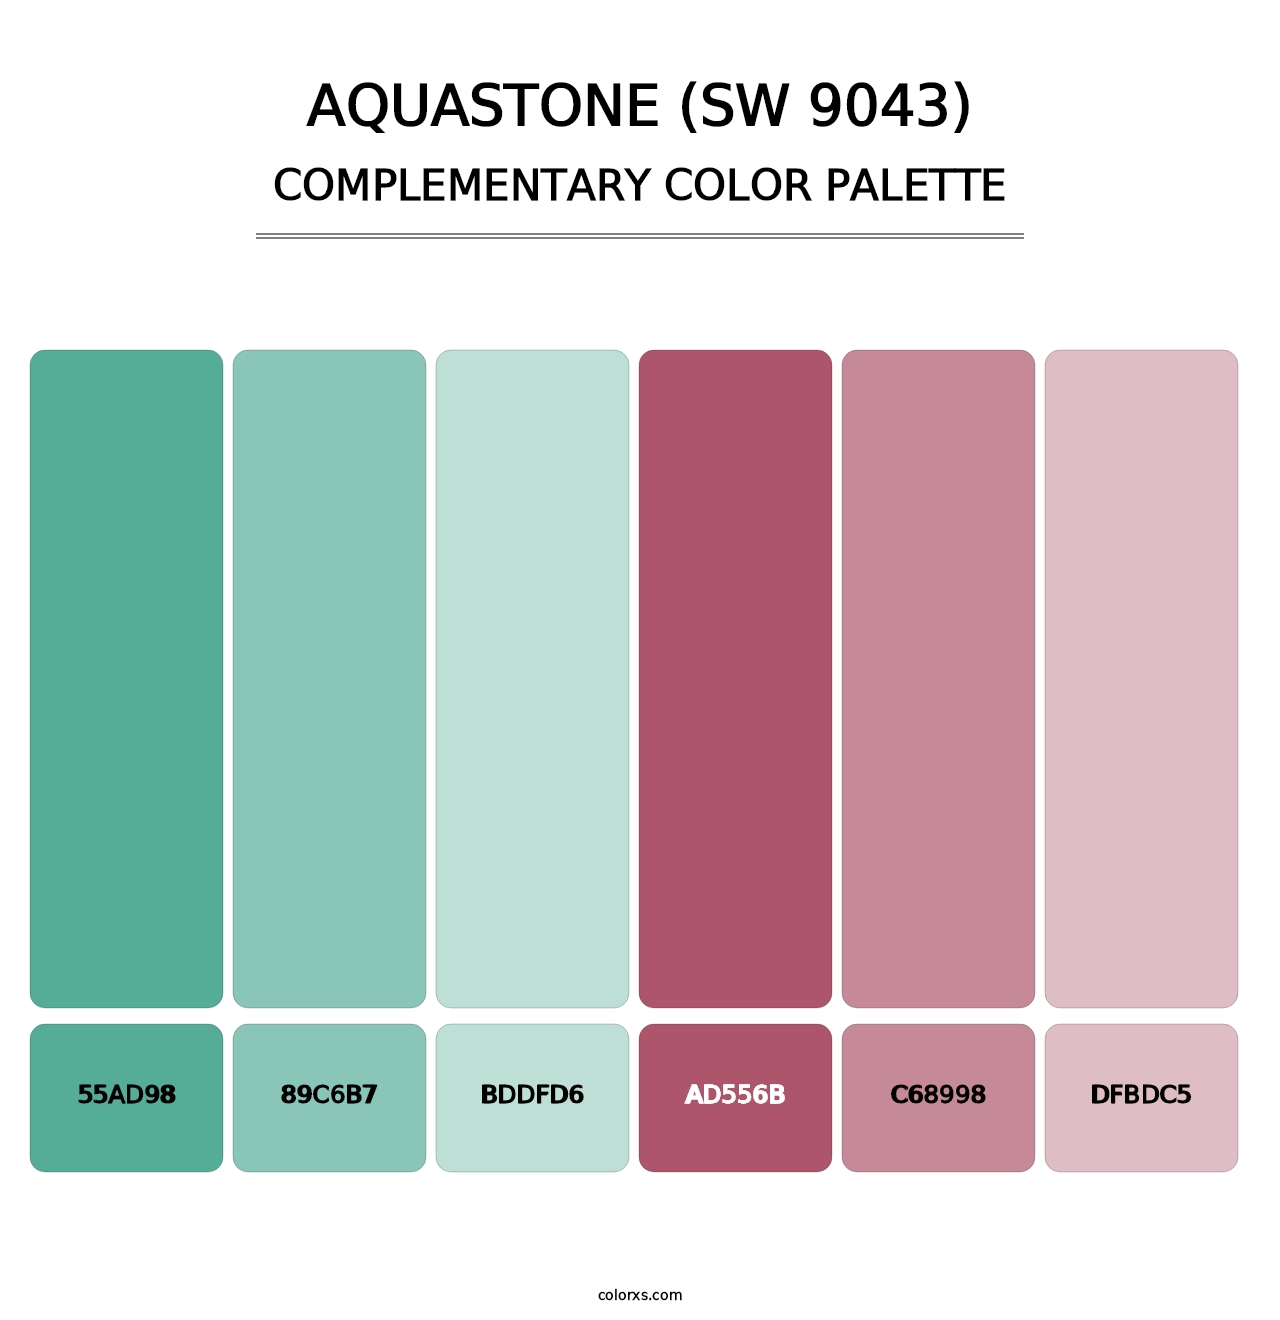 Aquastone (SW 9043) - Complementary Color Palette